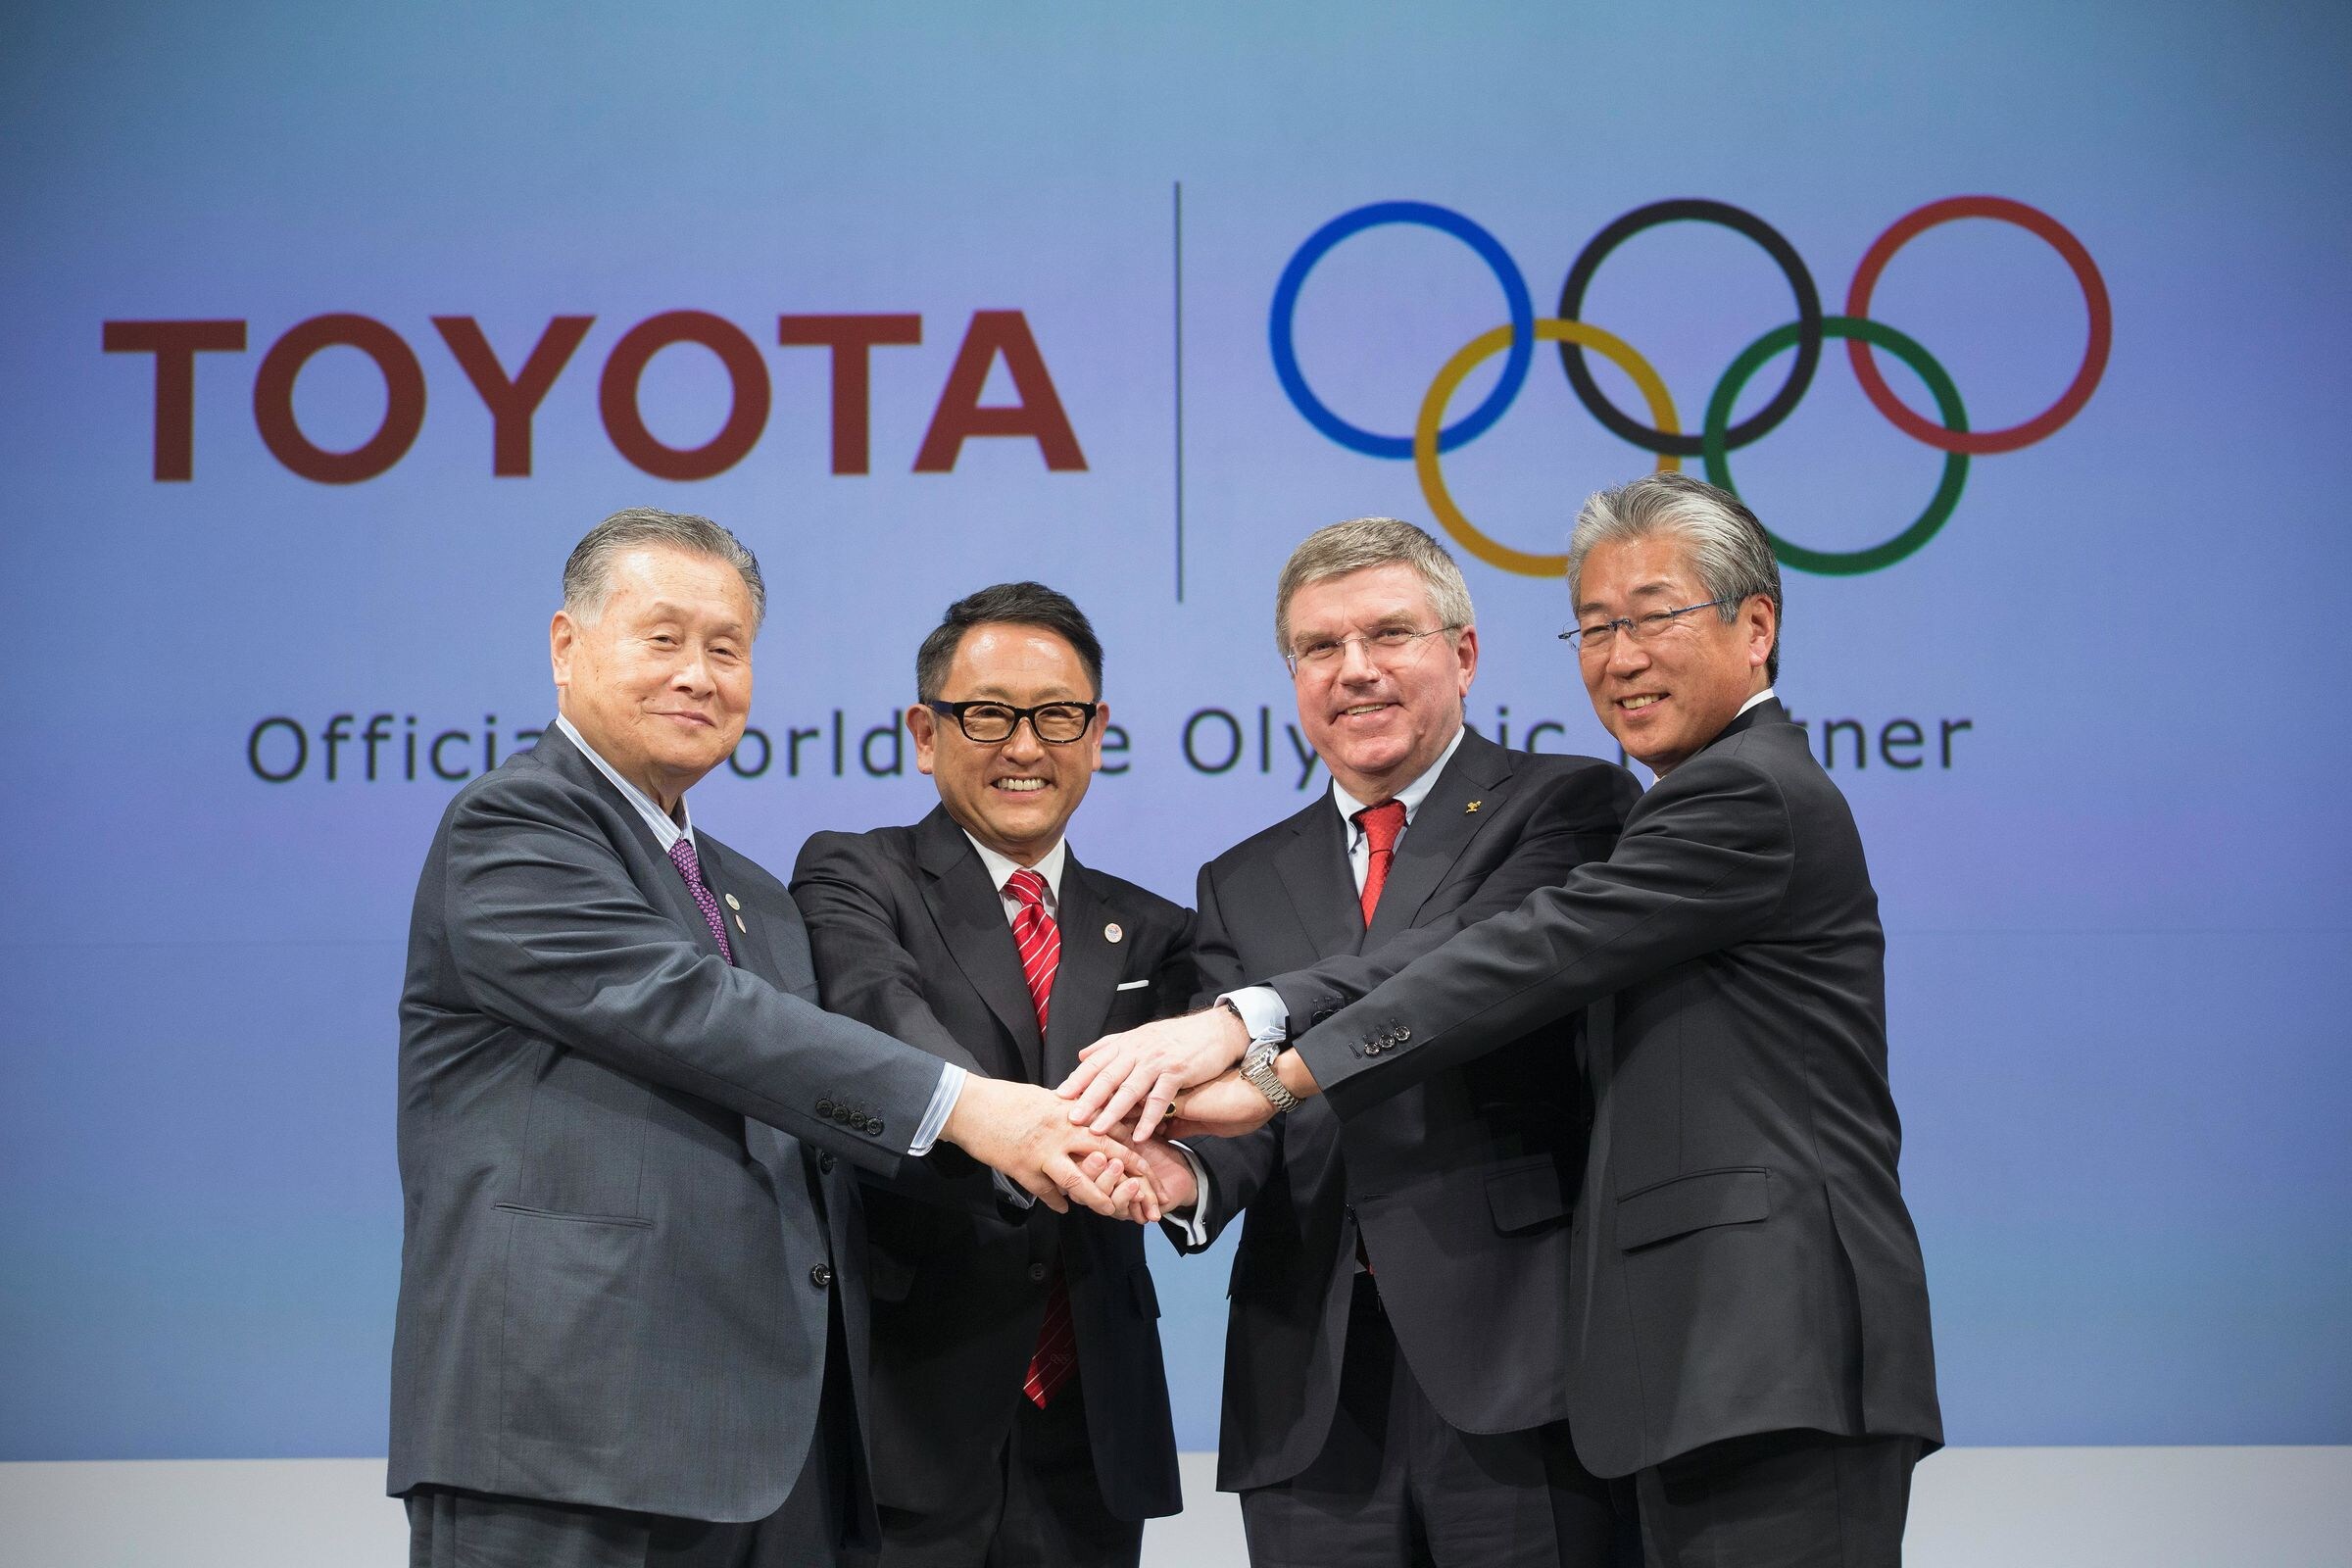 Sponsors Toyota